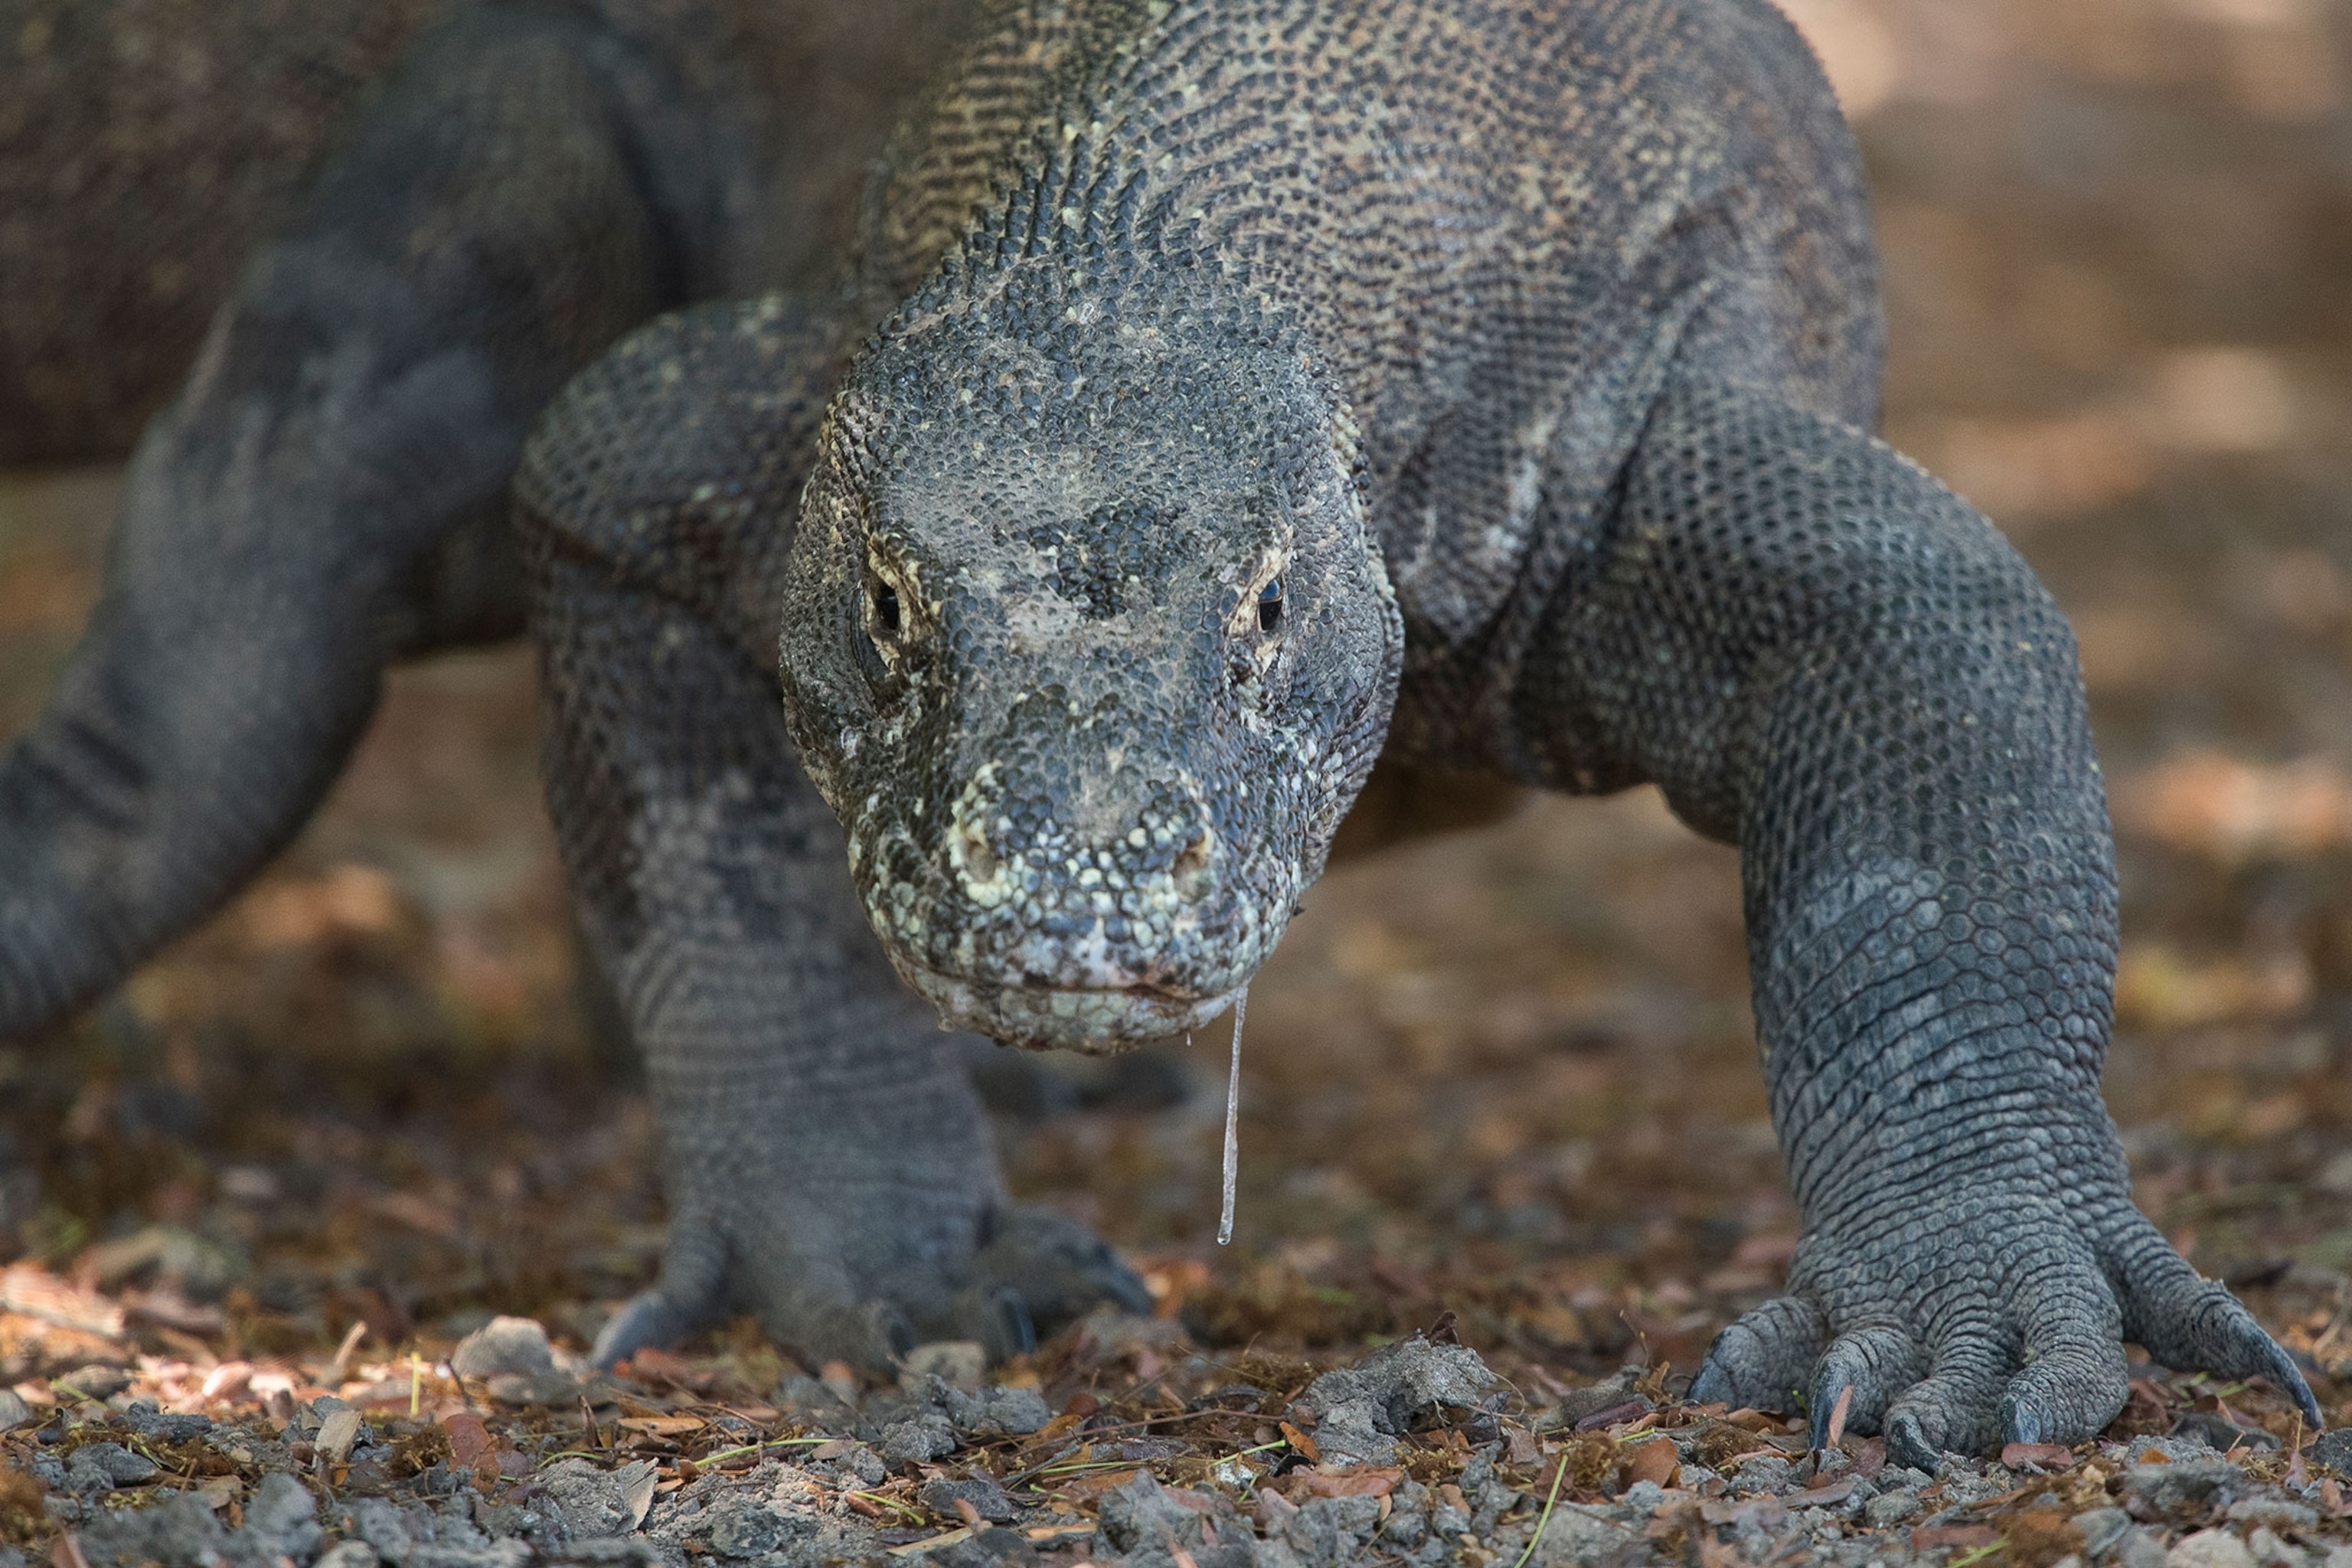 Is the Komodo dragon really venomous?